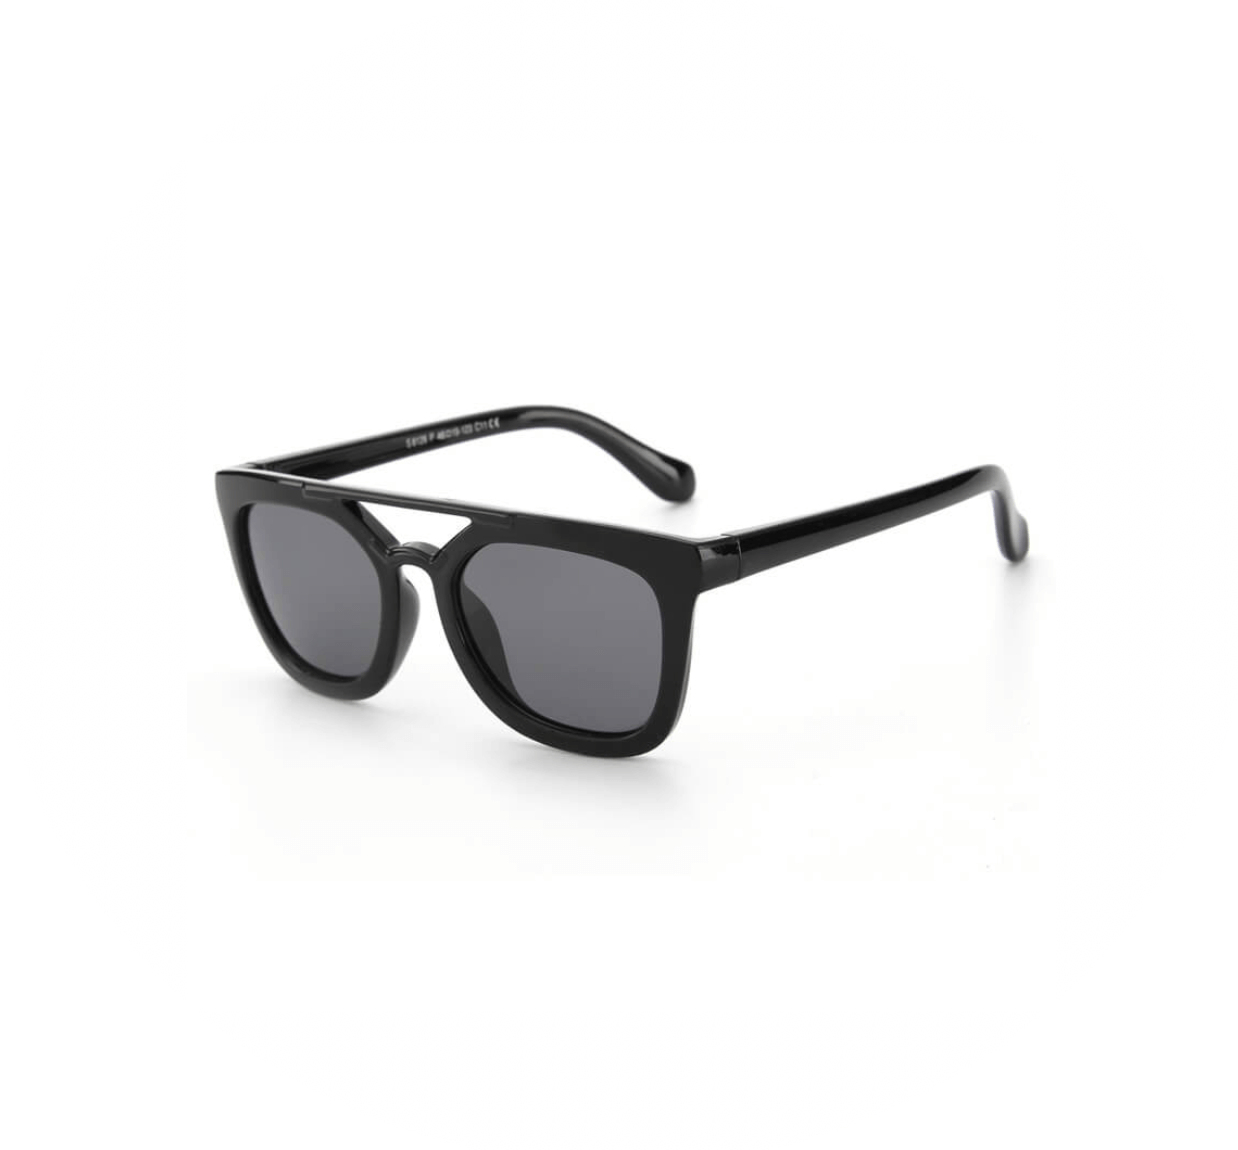  polarized wholesale sunglasses, black aviator childrens sunglasses, polarized sunglasses China, bulk polarized sunglasses, sunglasses supplier